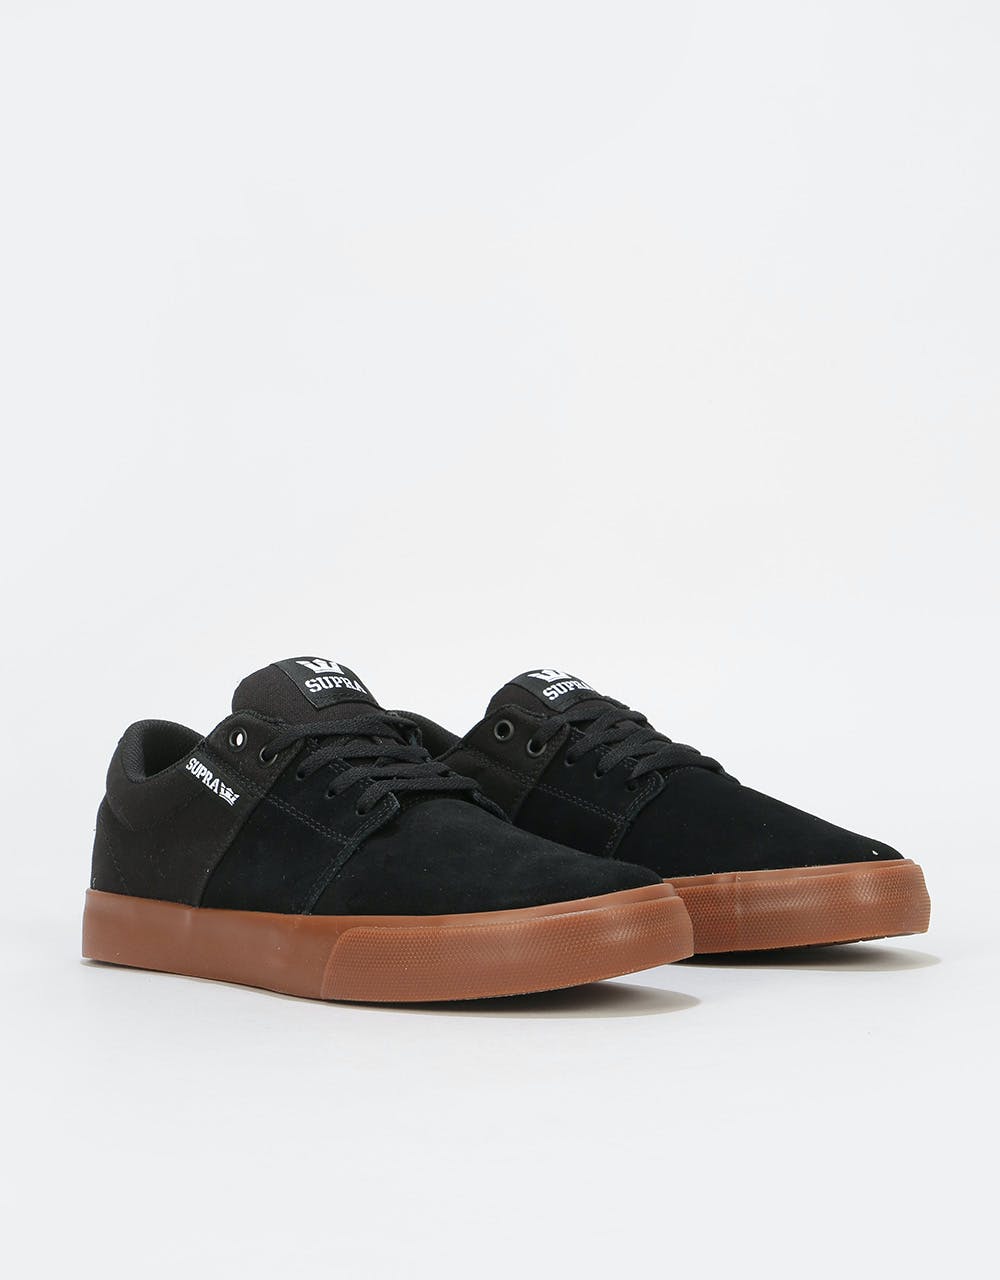 Supra Stacks Vulc II Skate Shoes - Black/Gum